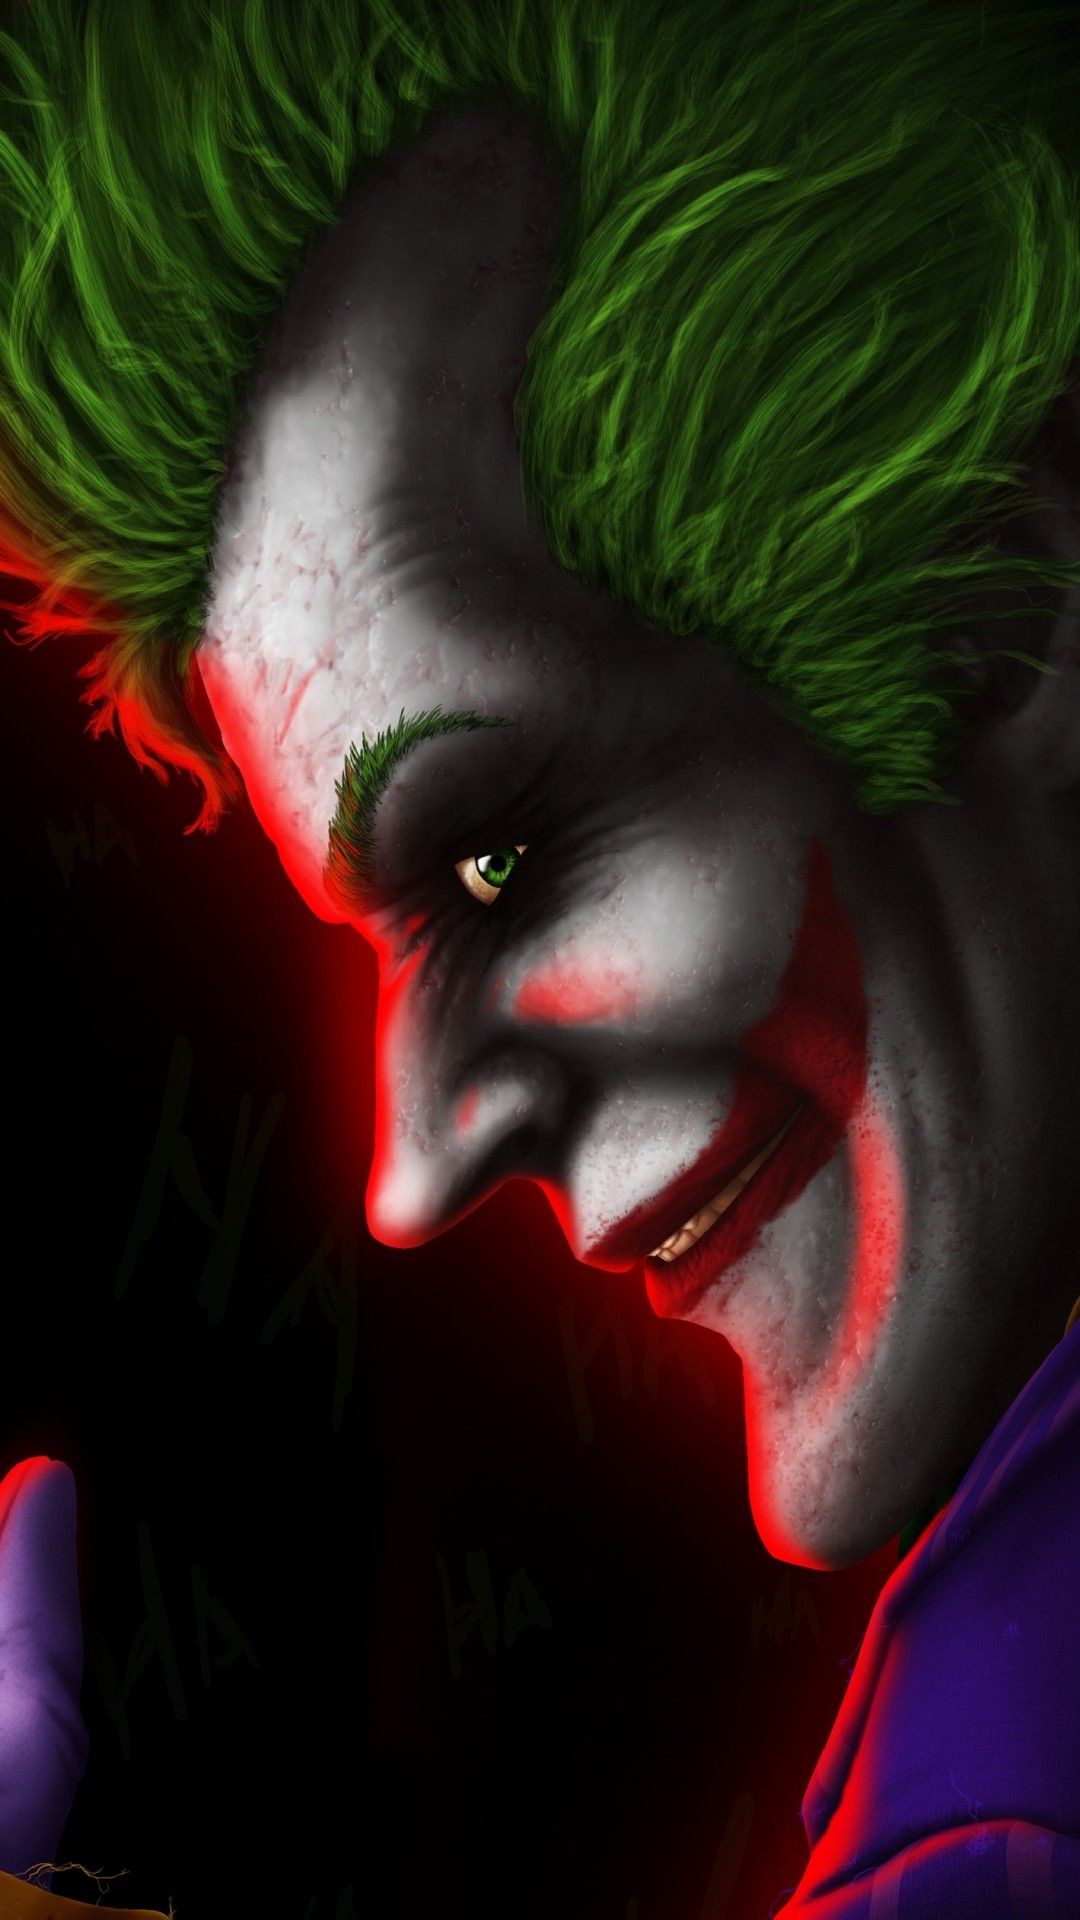 Joker download the last version for iphone